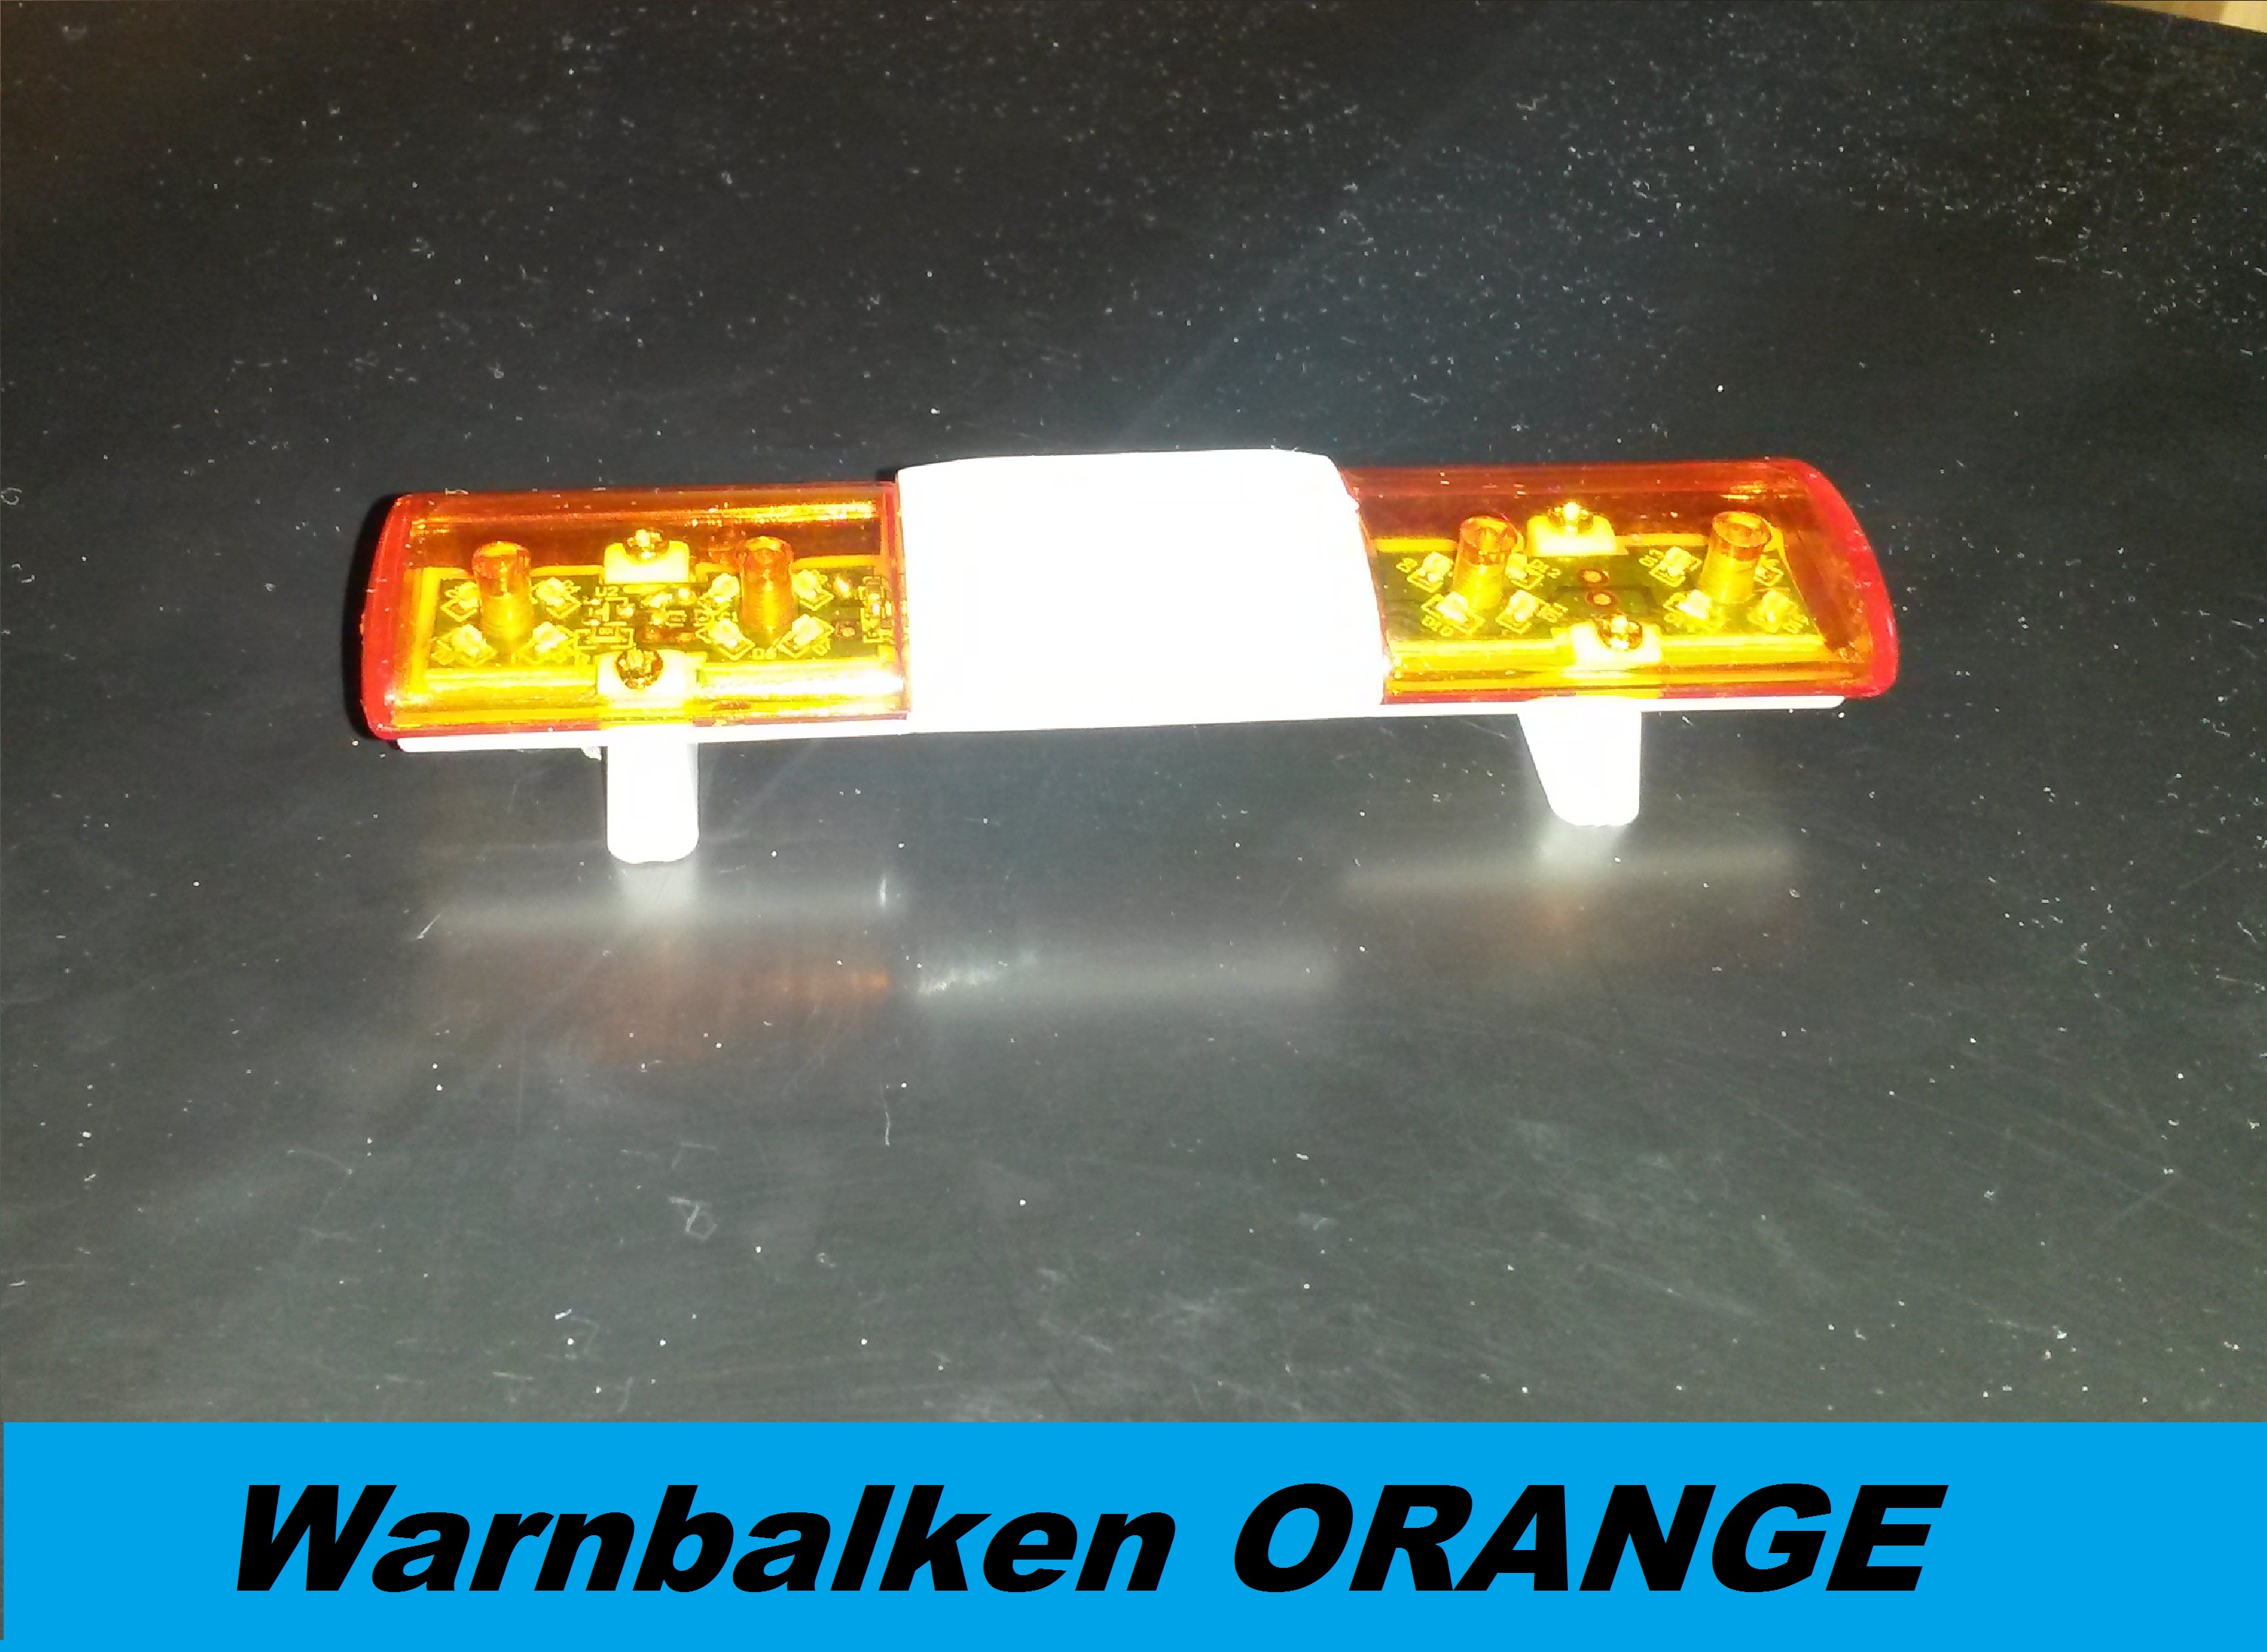  Beleuchtung RC Car - LEDs & Zubehör Modellbau Sounds  Blitzlicht - FLASHING lights orange FLASHING for RC CARs